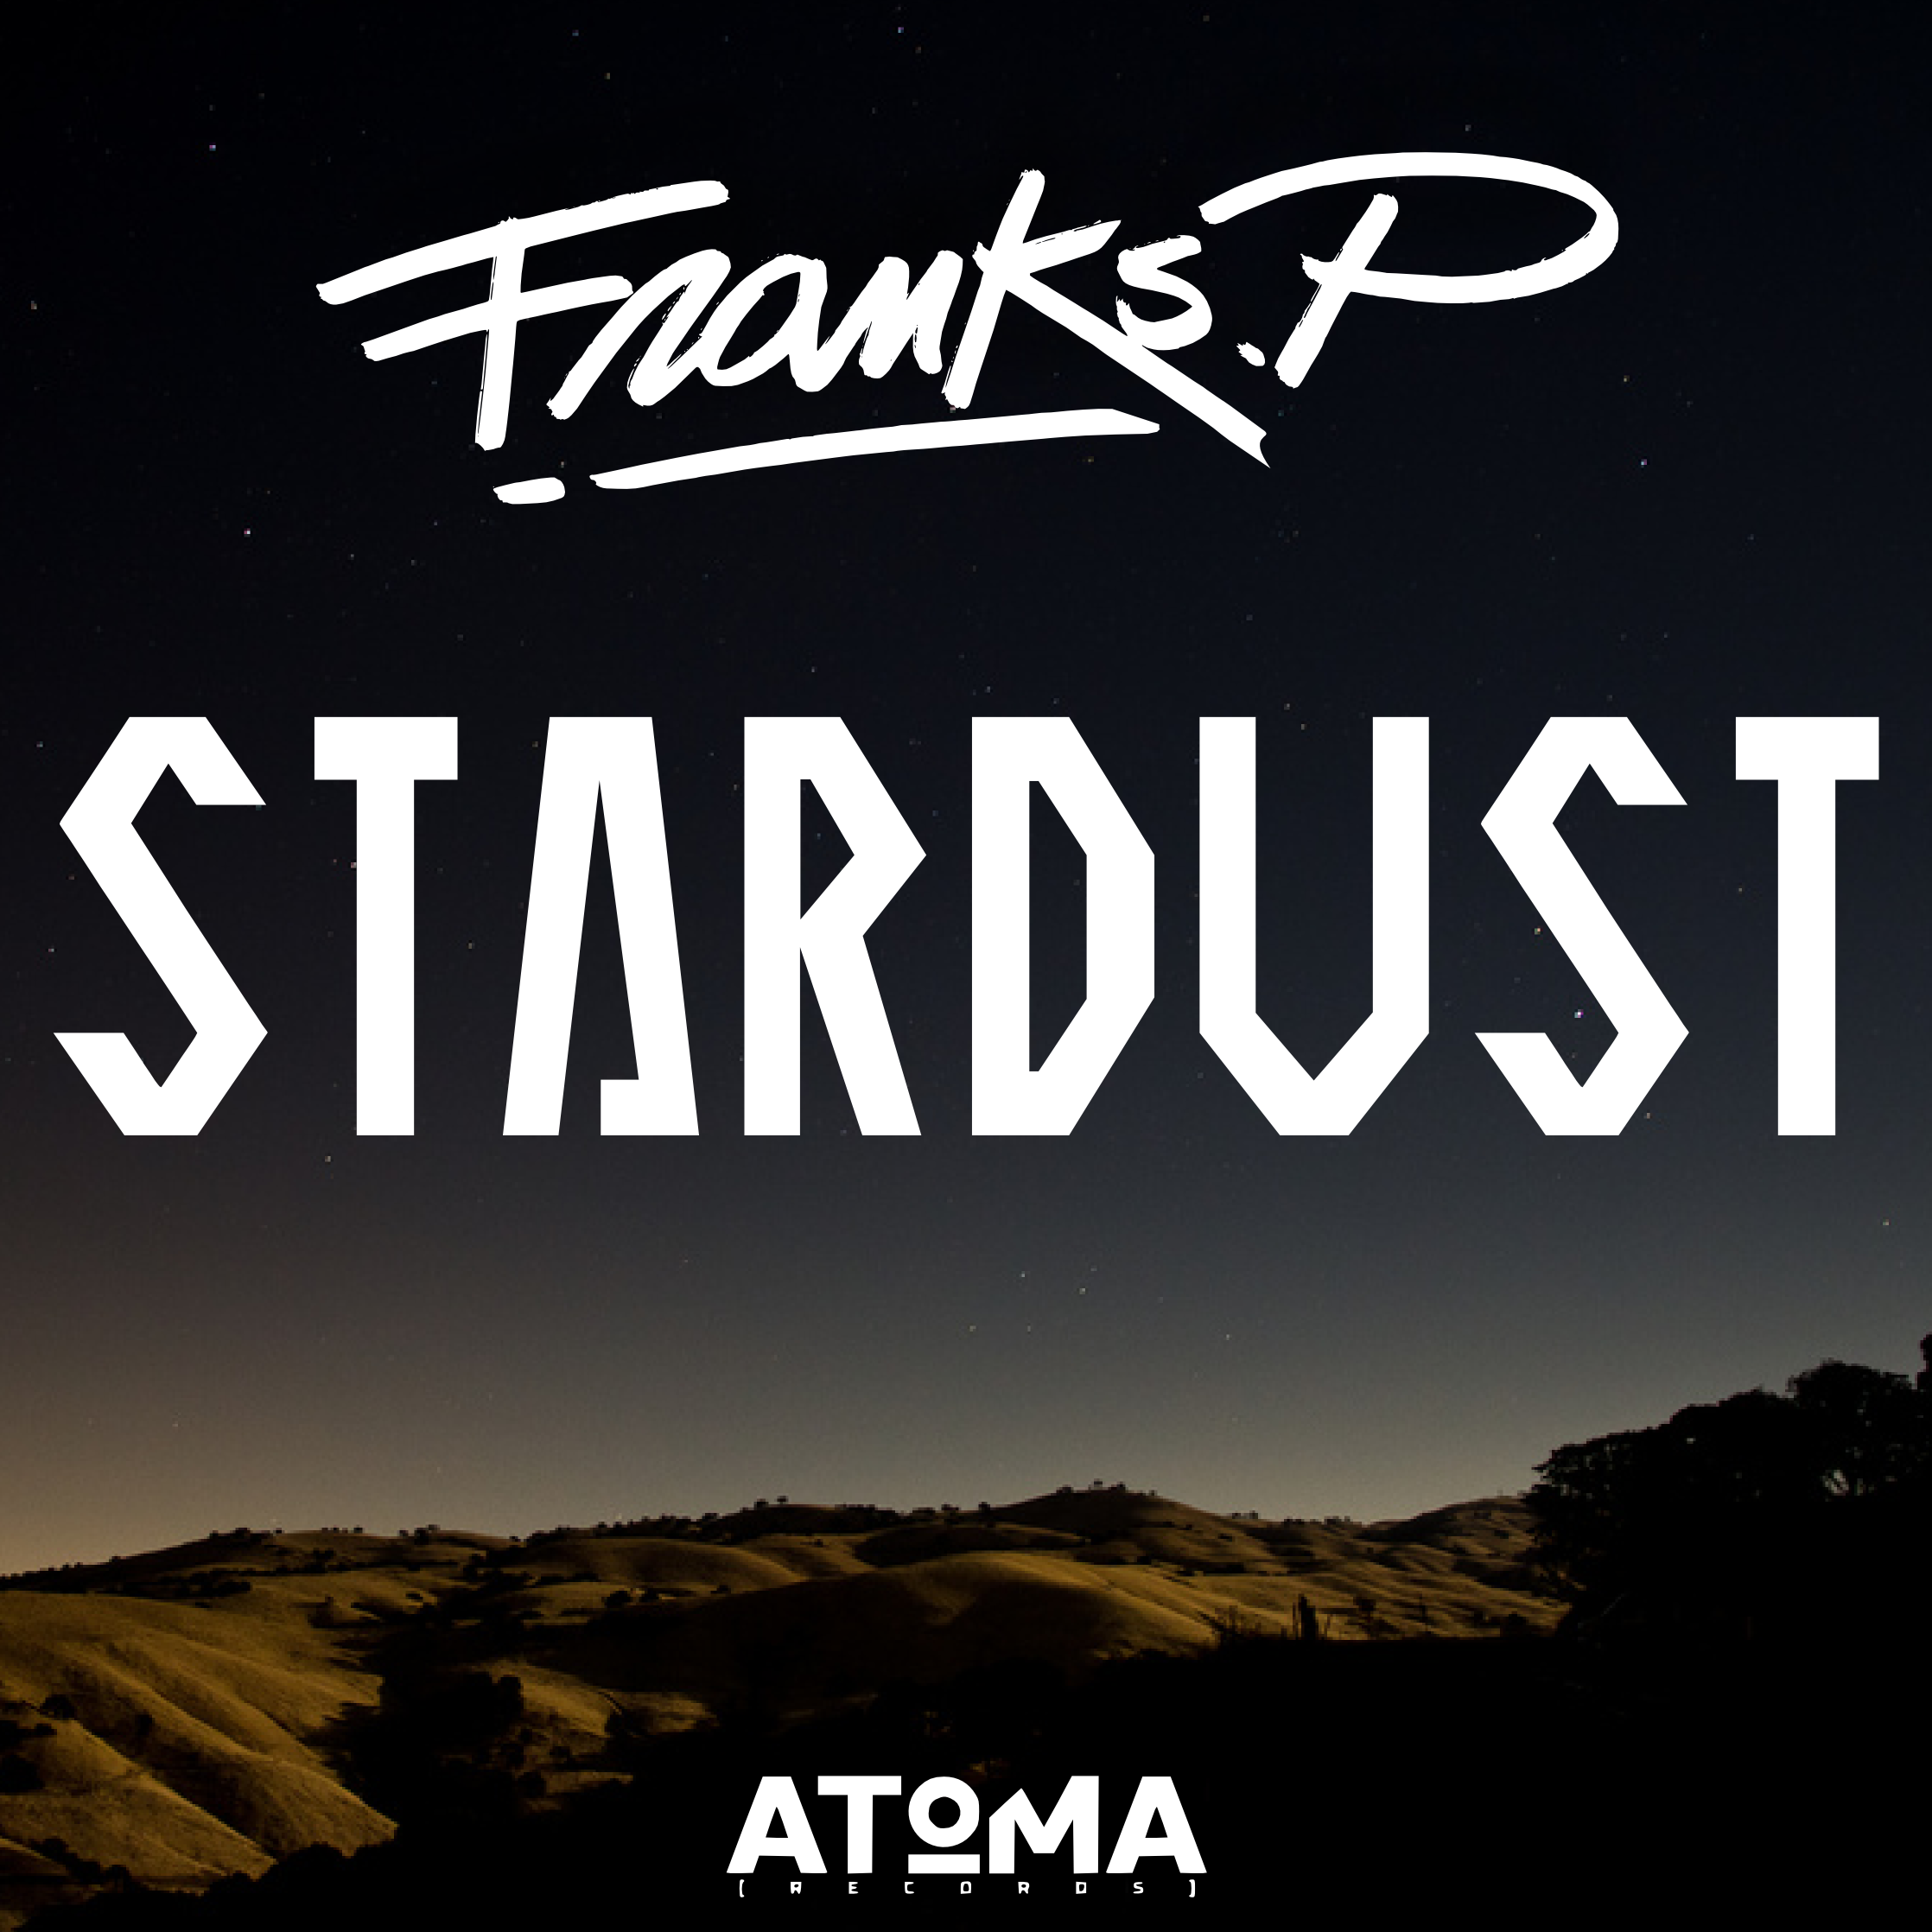 Franks P - Stardust.png